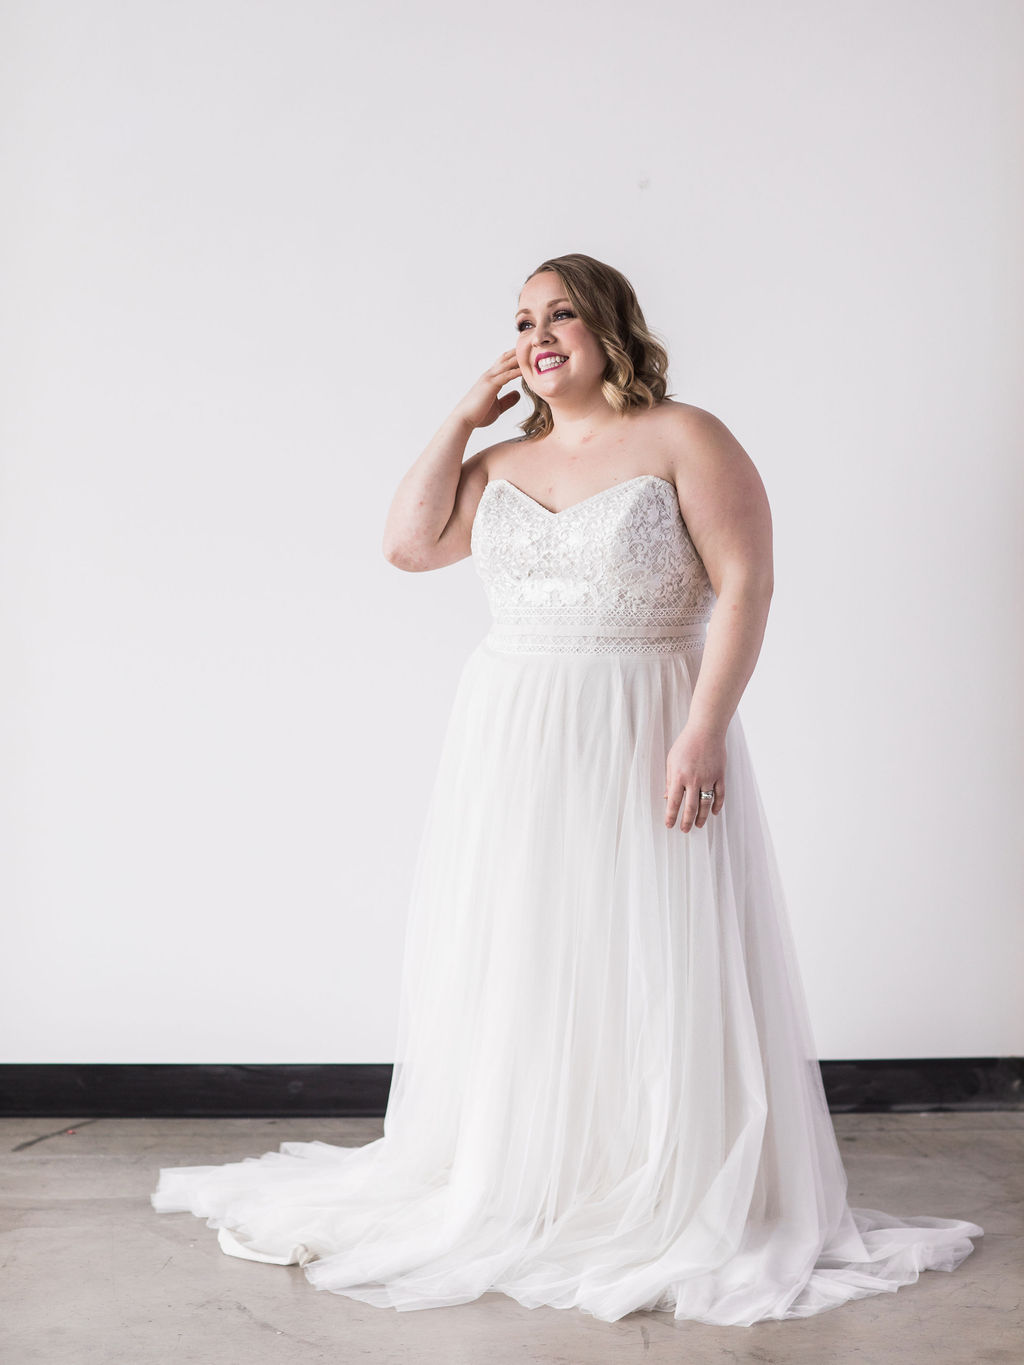 Plus size bride wedding dress spokane